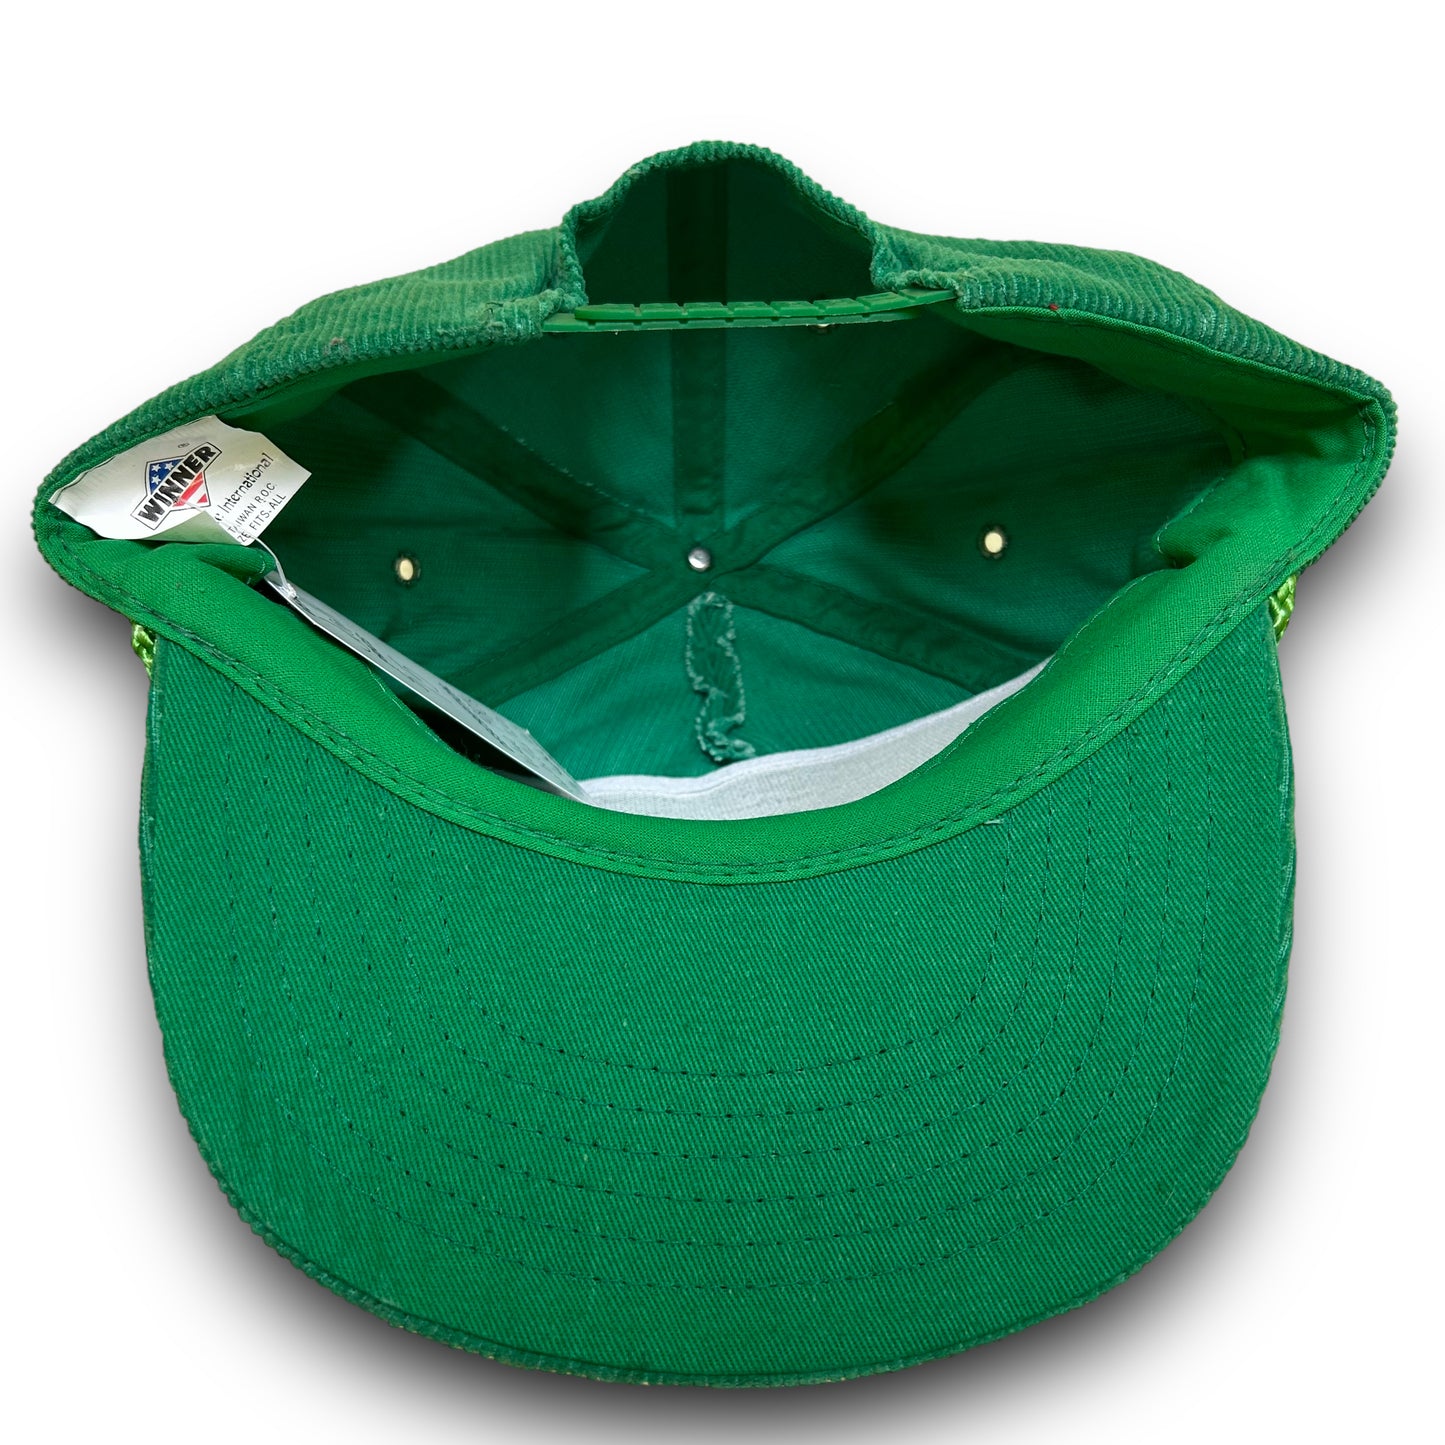 Vintage 1990s “Country Club Tavern” Green Corduroy Snapback Hat